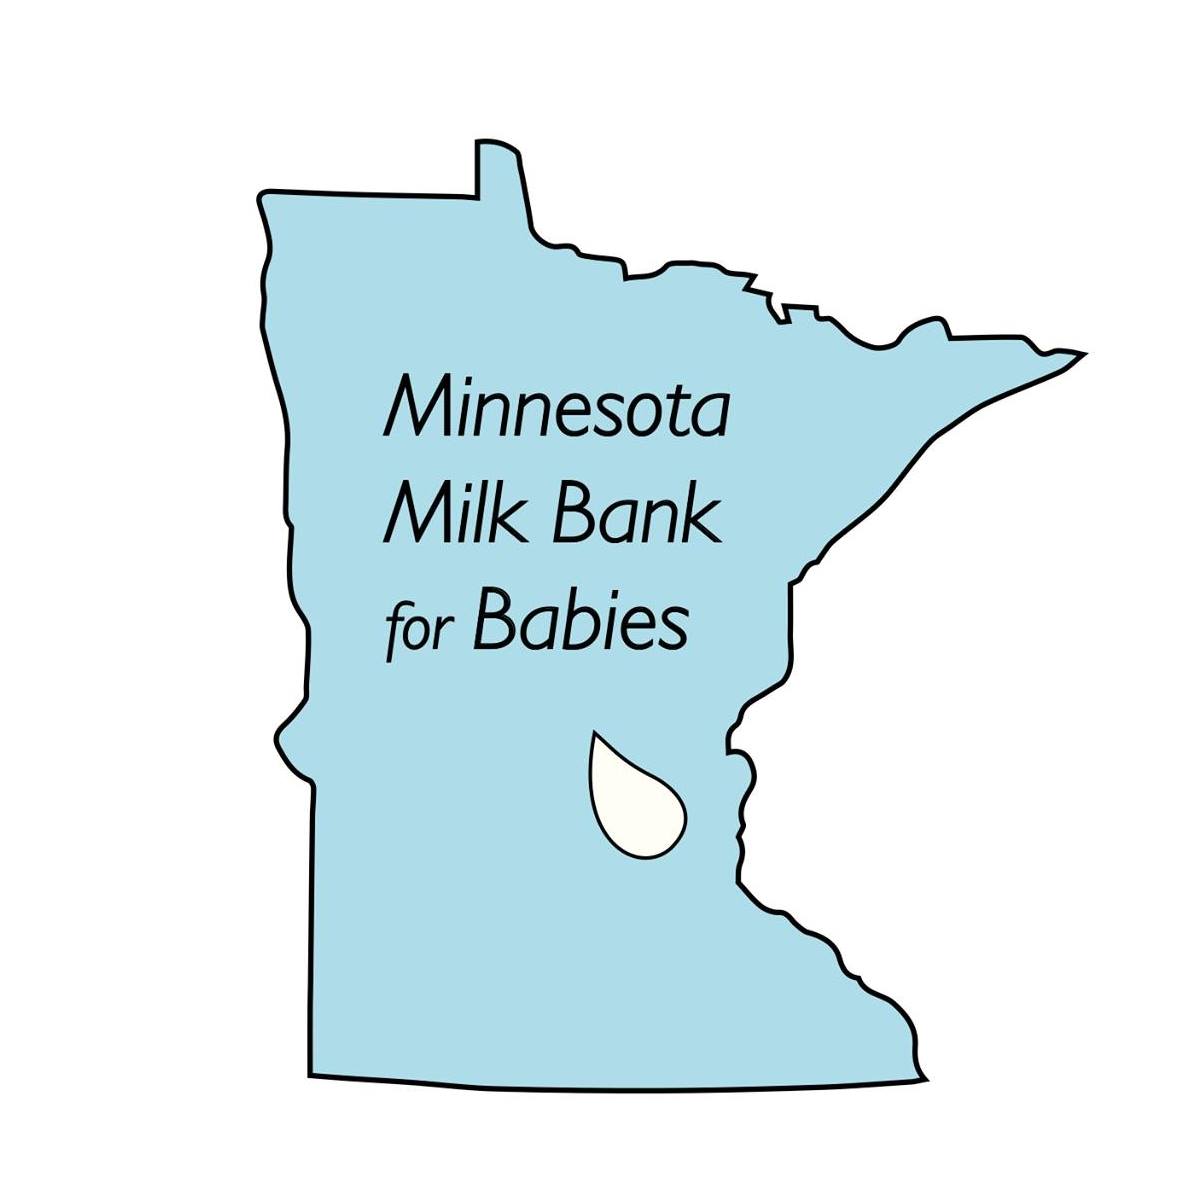 Minnesota Milk Bank for Babies